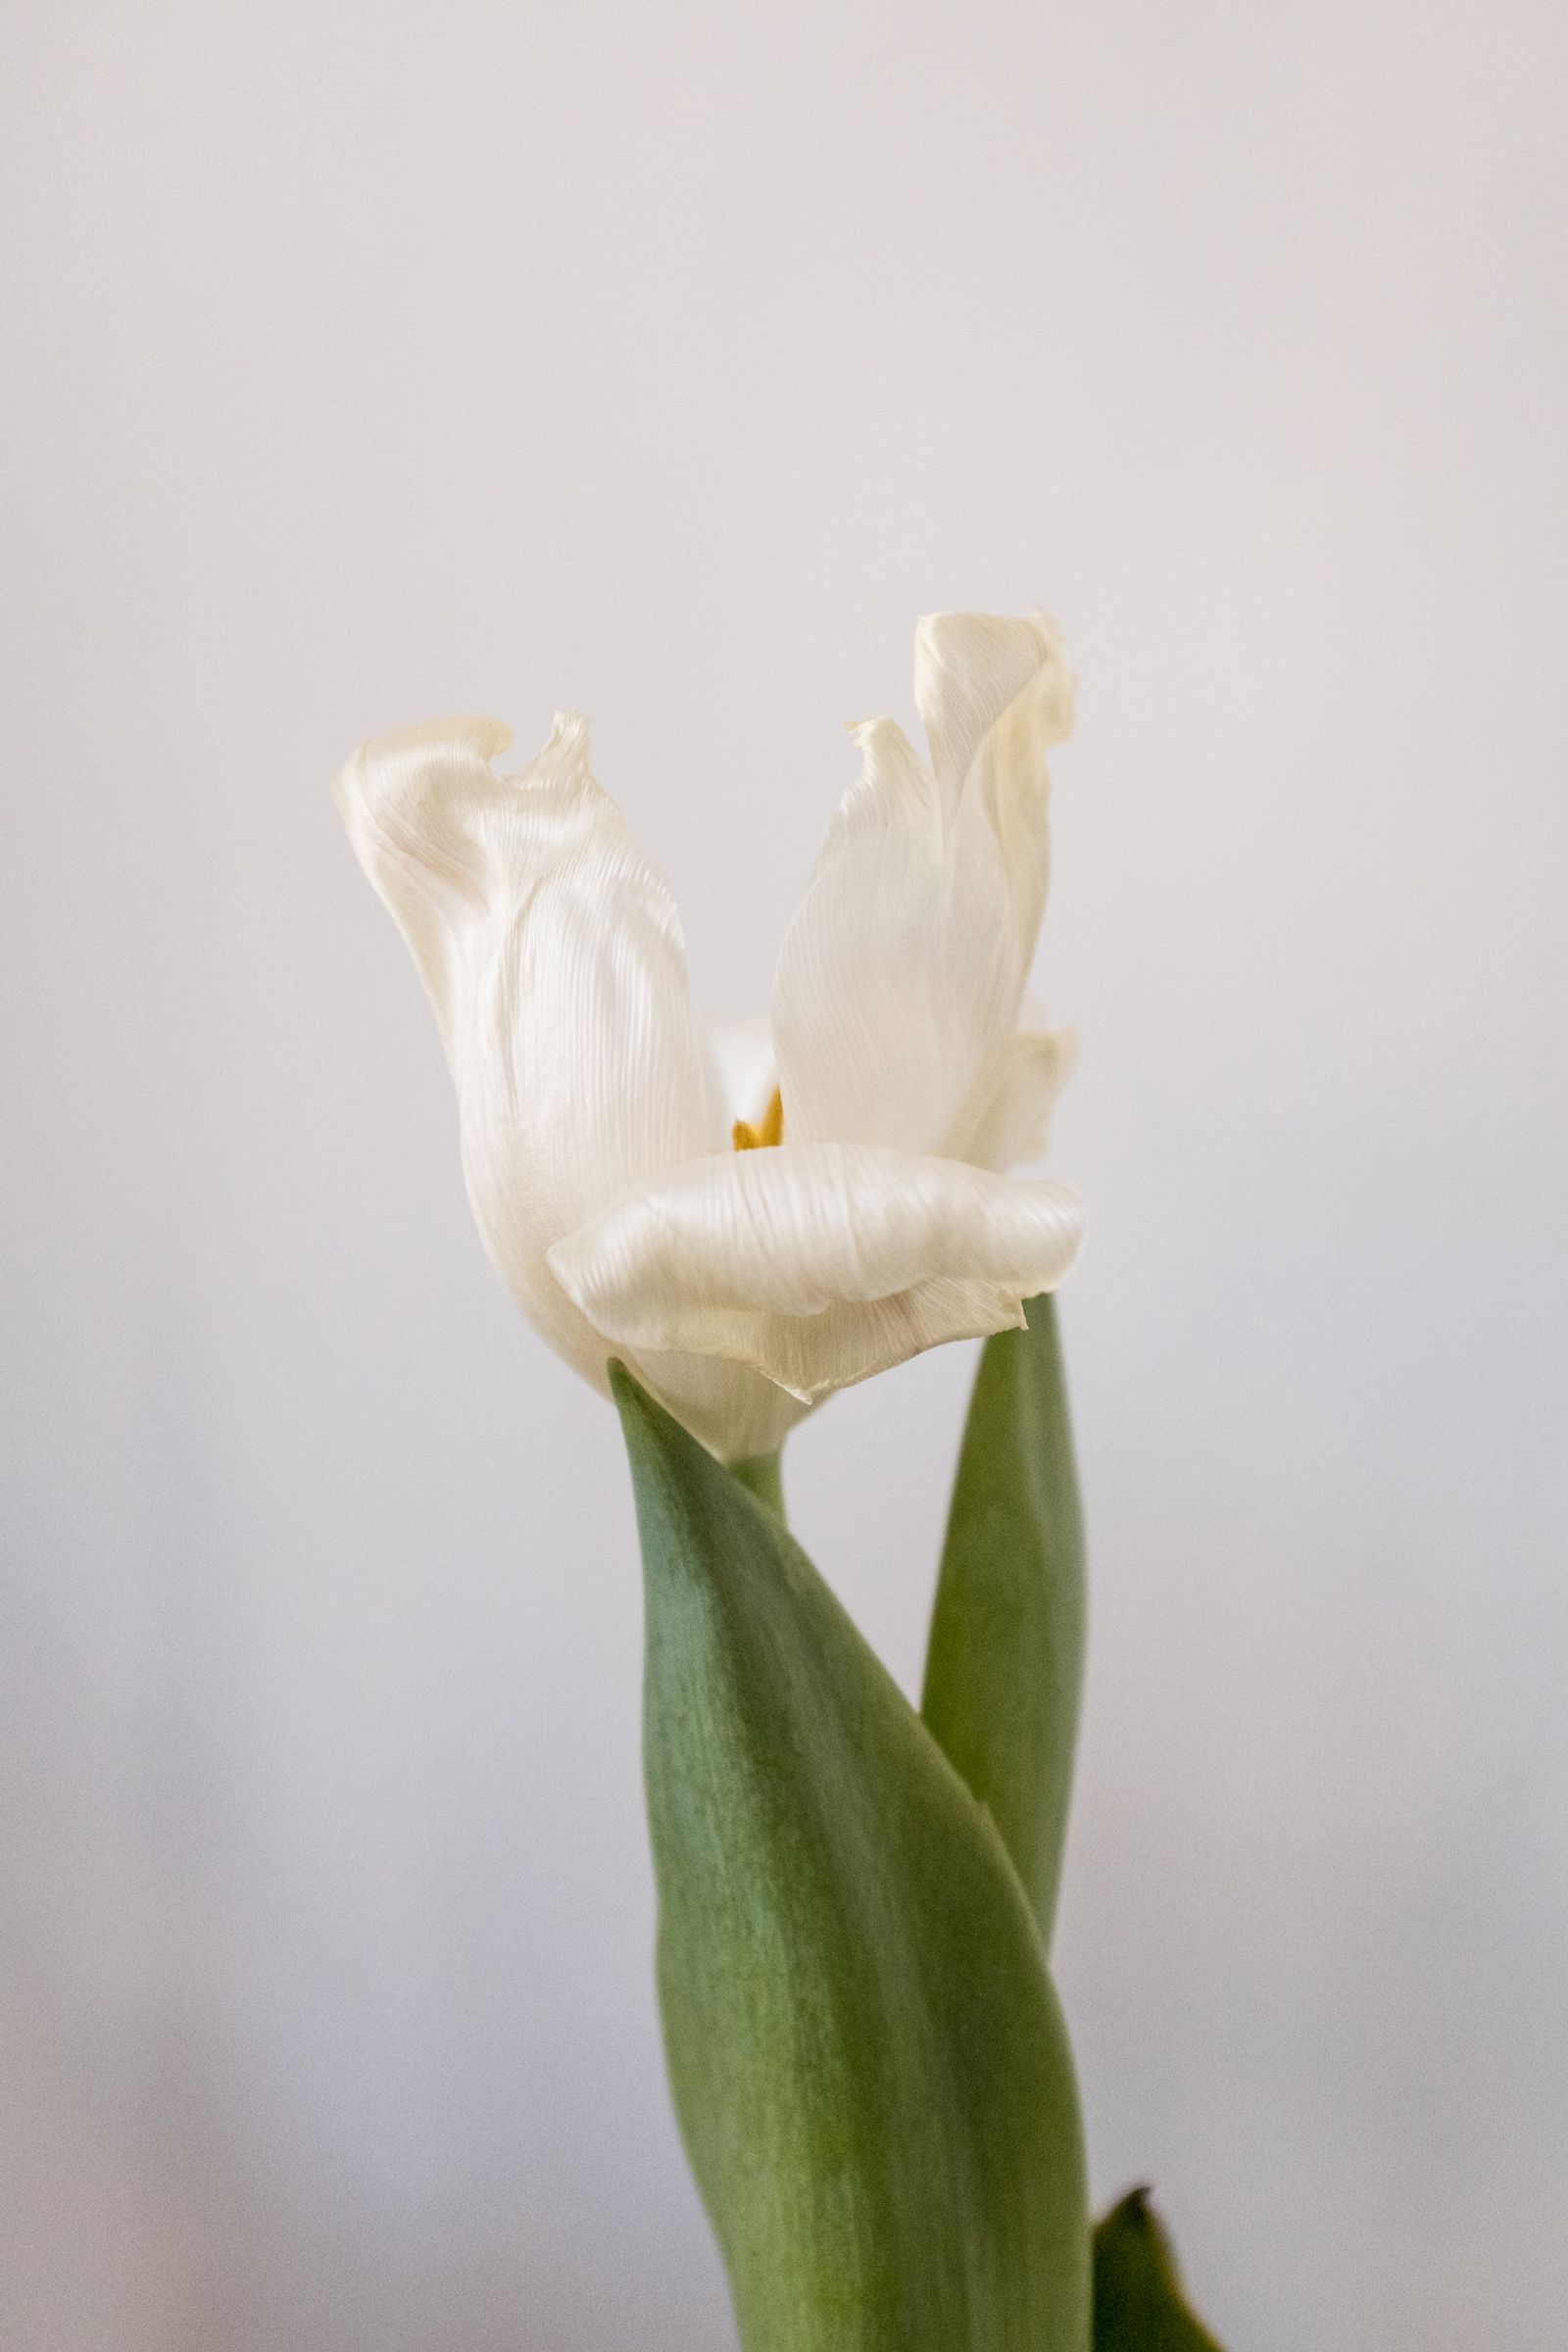 © Francesca Cirilli - Blooming and fading (Tulip)